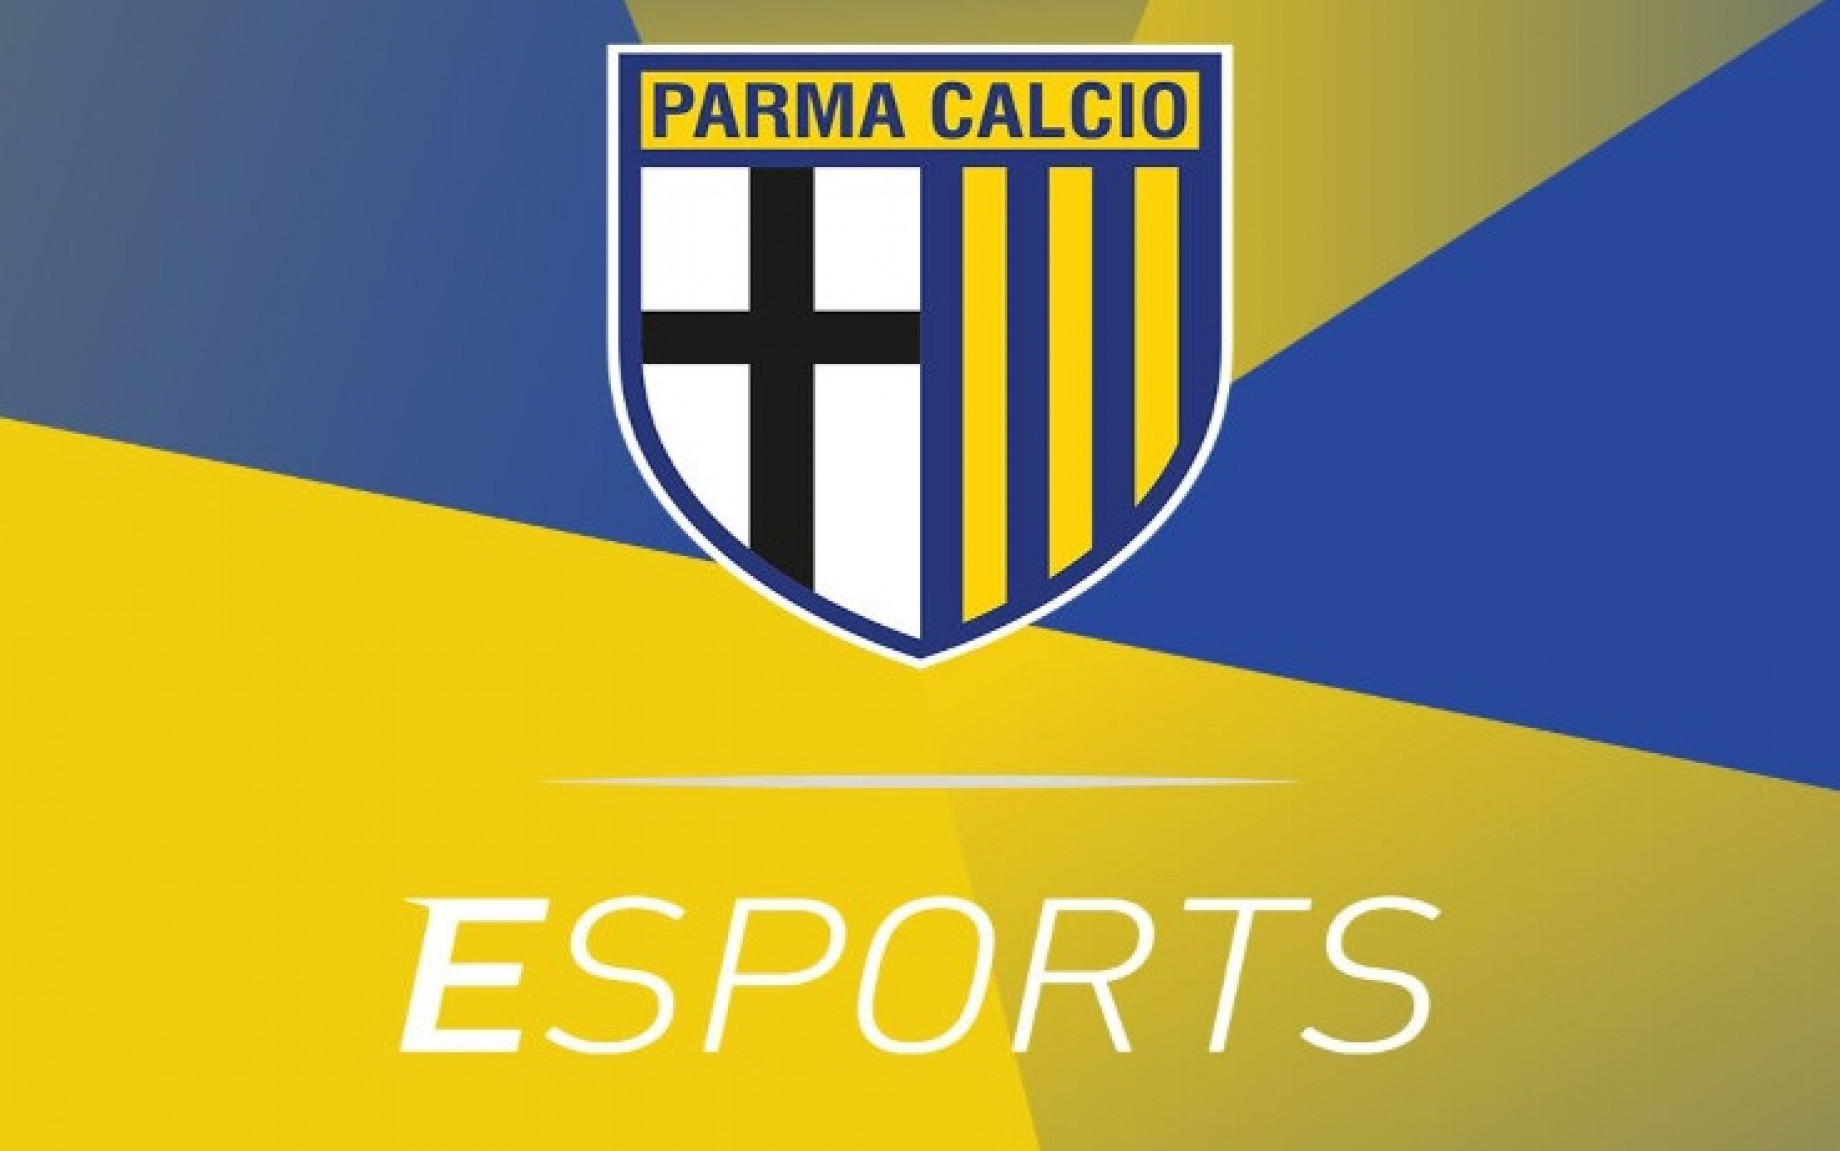 Parma_esports.jpg